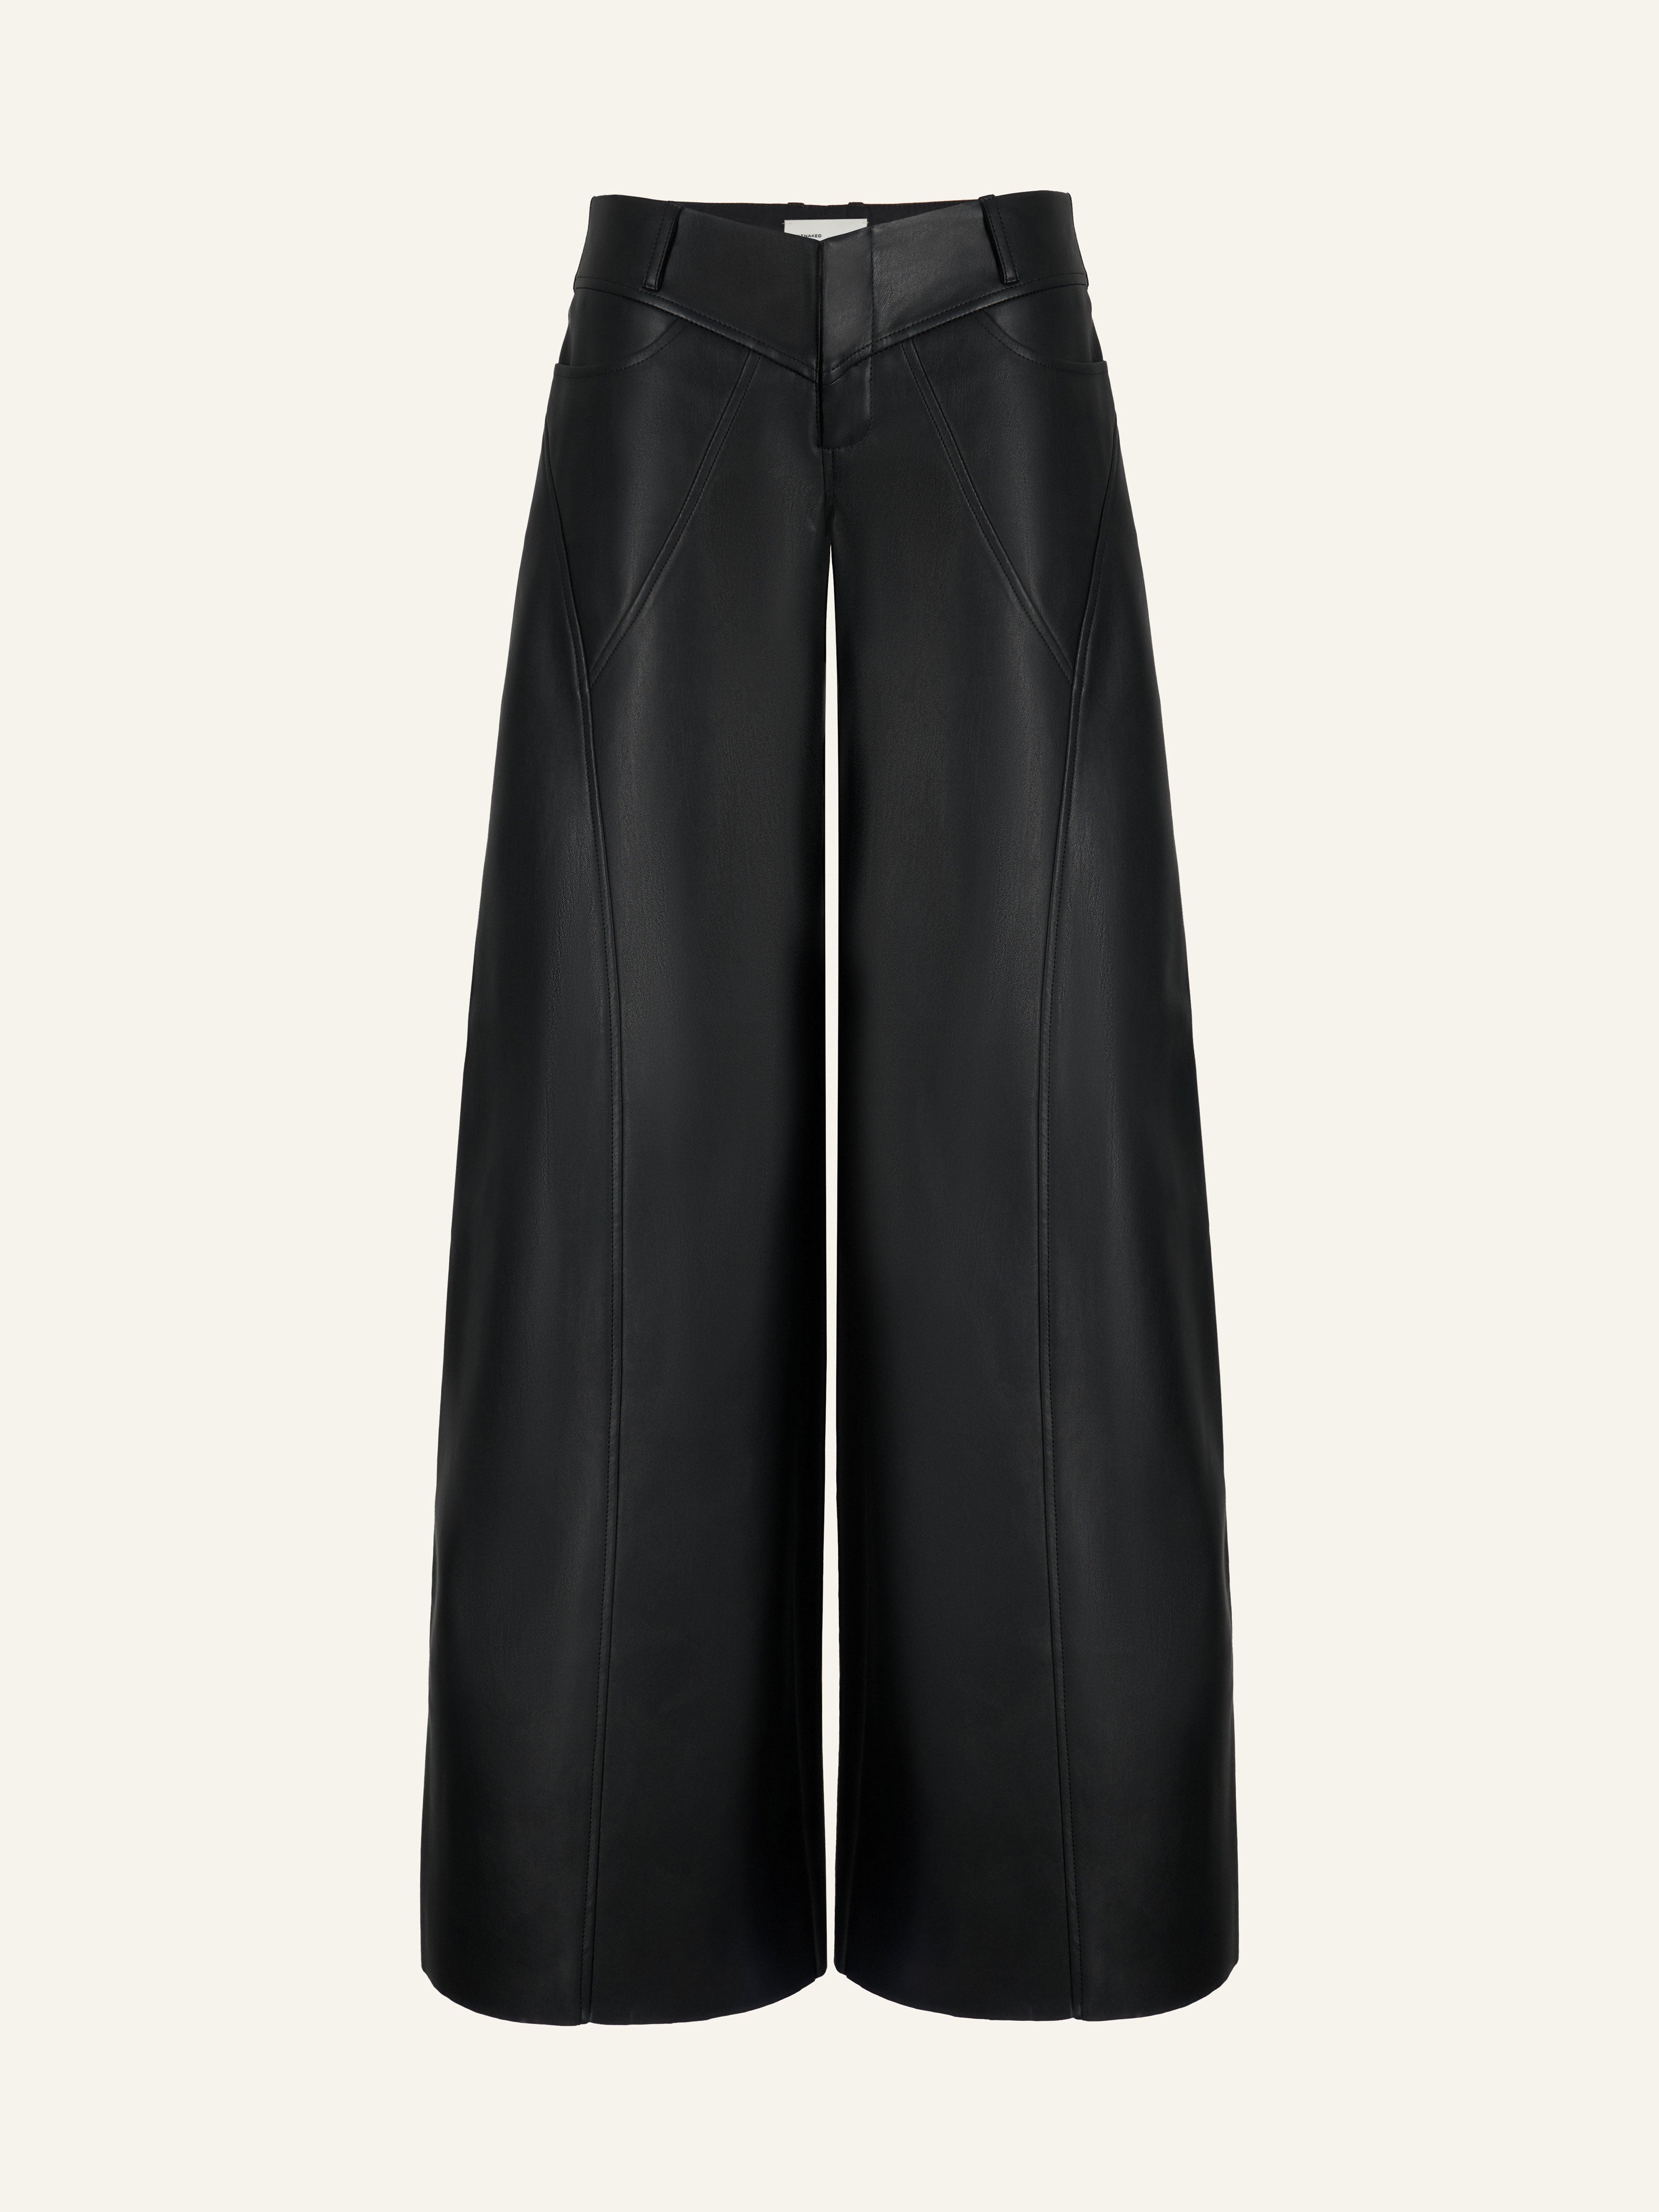 Product photo of black vegan leather low rise wide leg pants